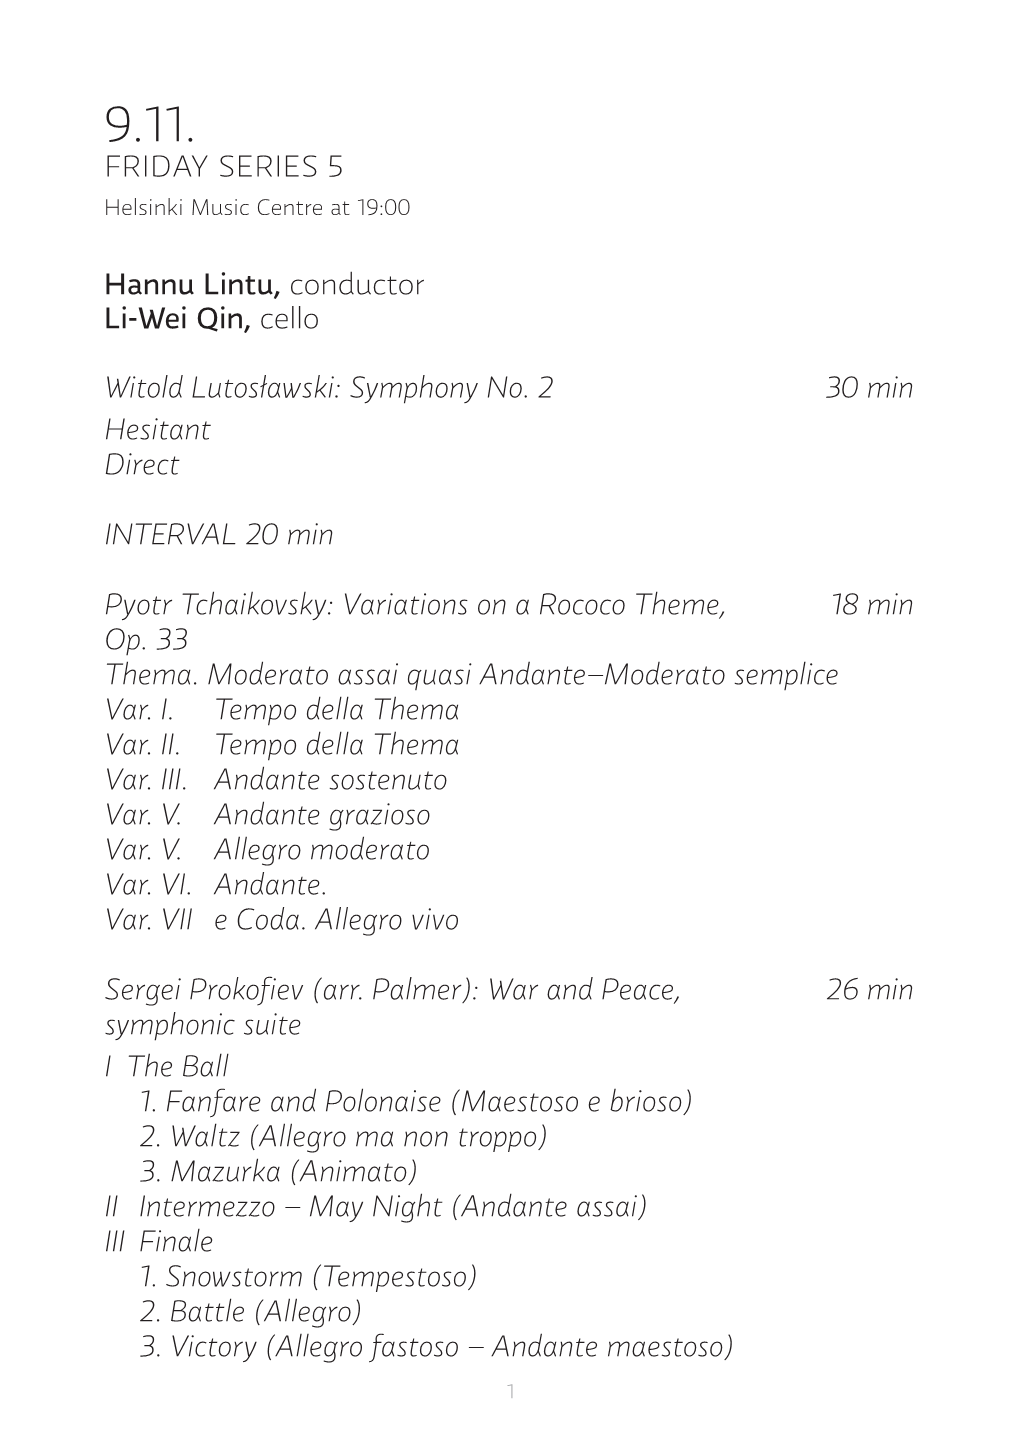 FRIDAY SERIES 5 Hannu Lintu, Conductor Li-Wei Qin, Cello